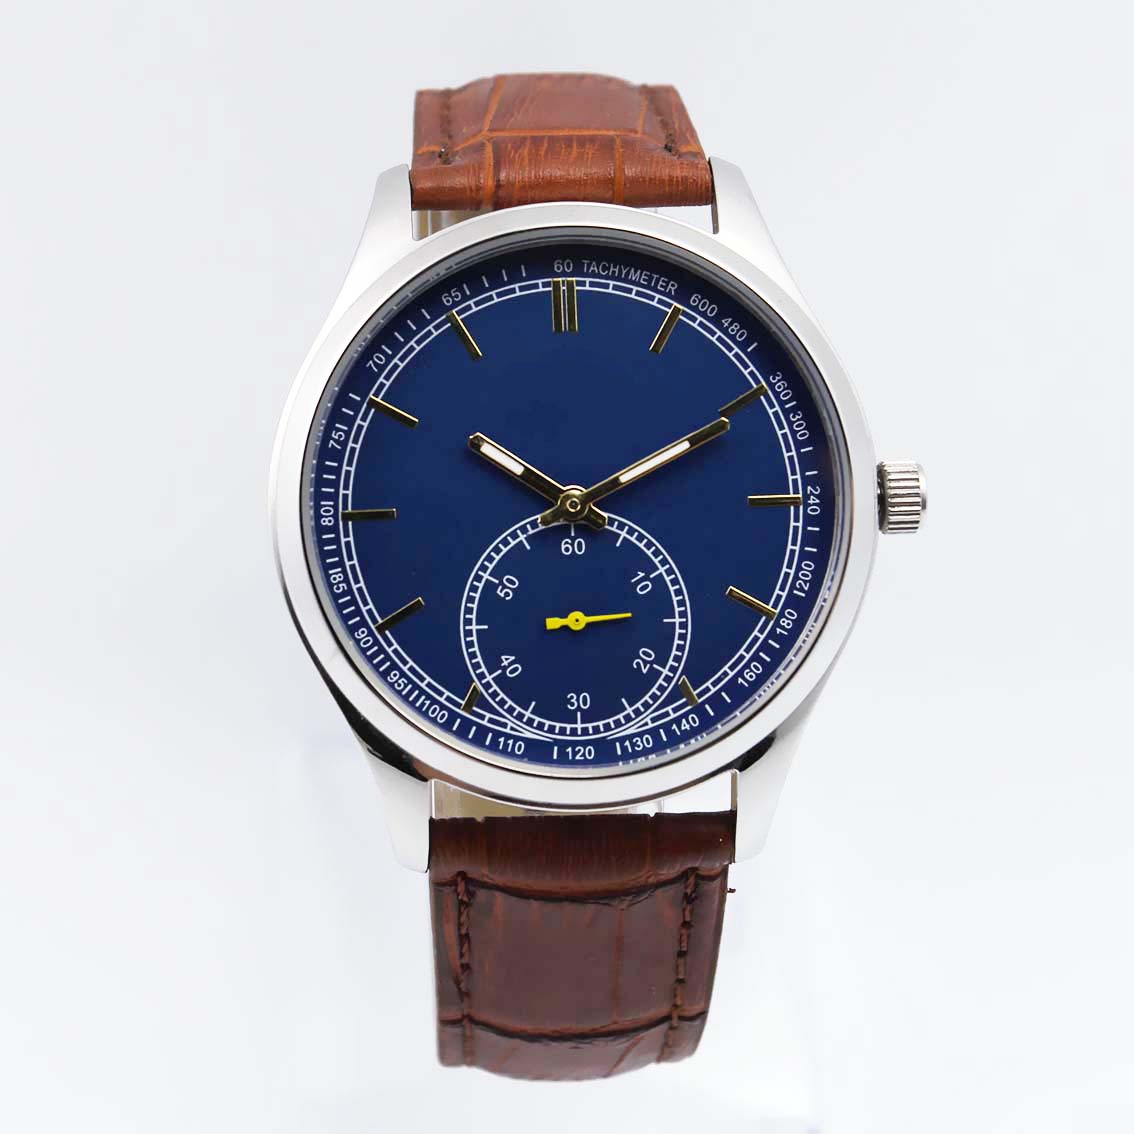 #02071Men's wristwatch quartz analog leather strap watch